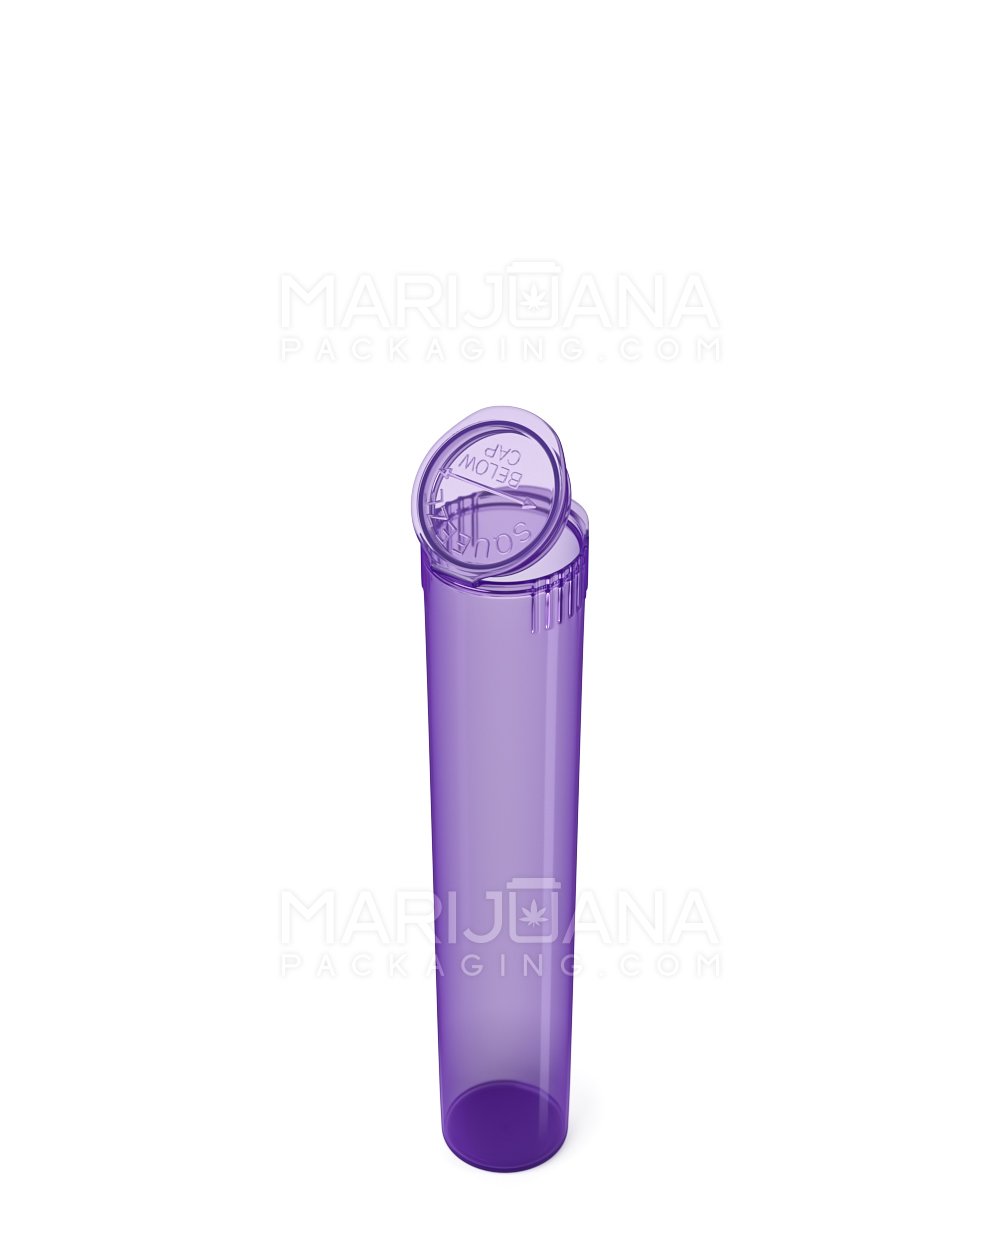 Child Resistant | Pop Top Translucent Plastic Pre-Roll Tubes | 95mm - Purple - 1000 Count - 3